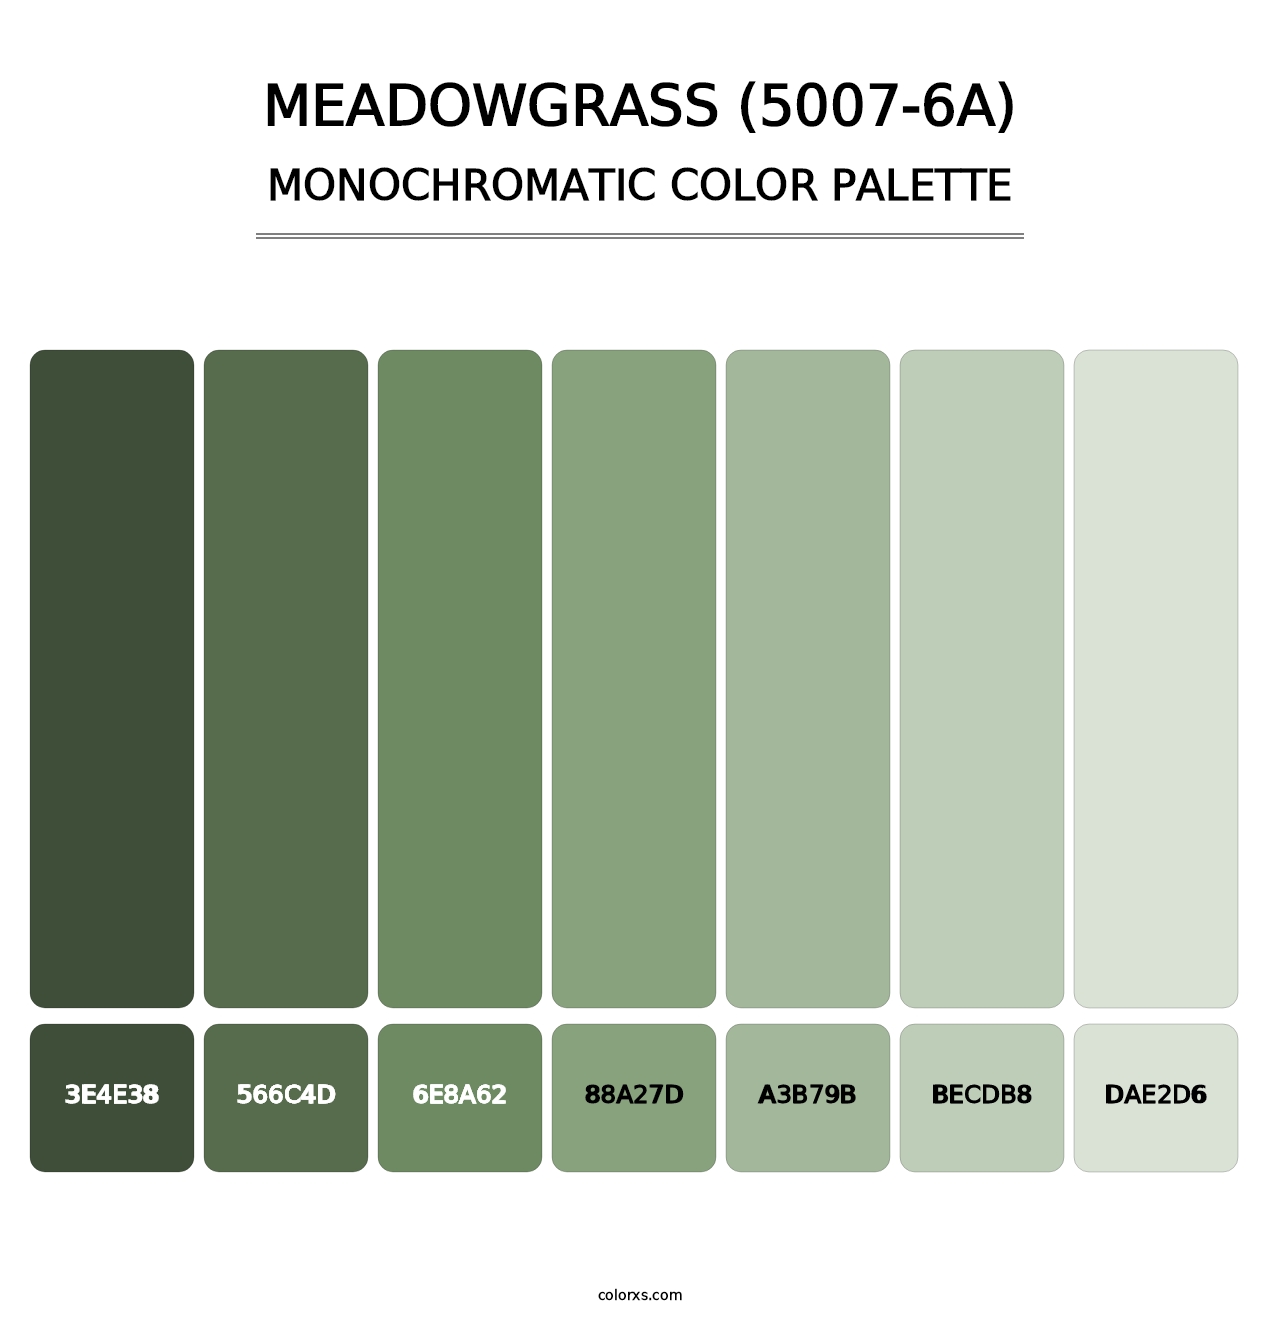 Meadowgrass (5007-6A) - Monochromatic Color Palette